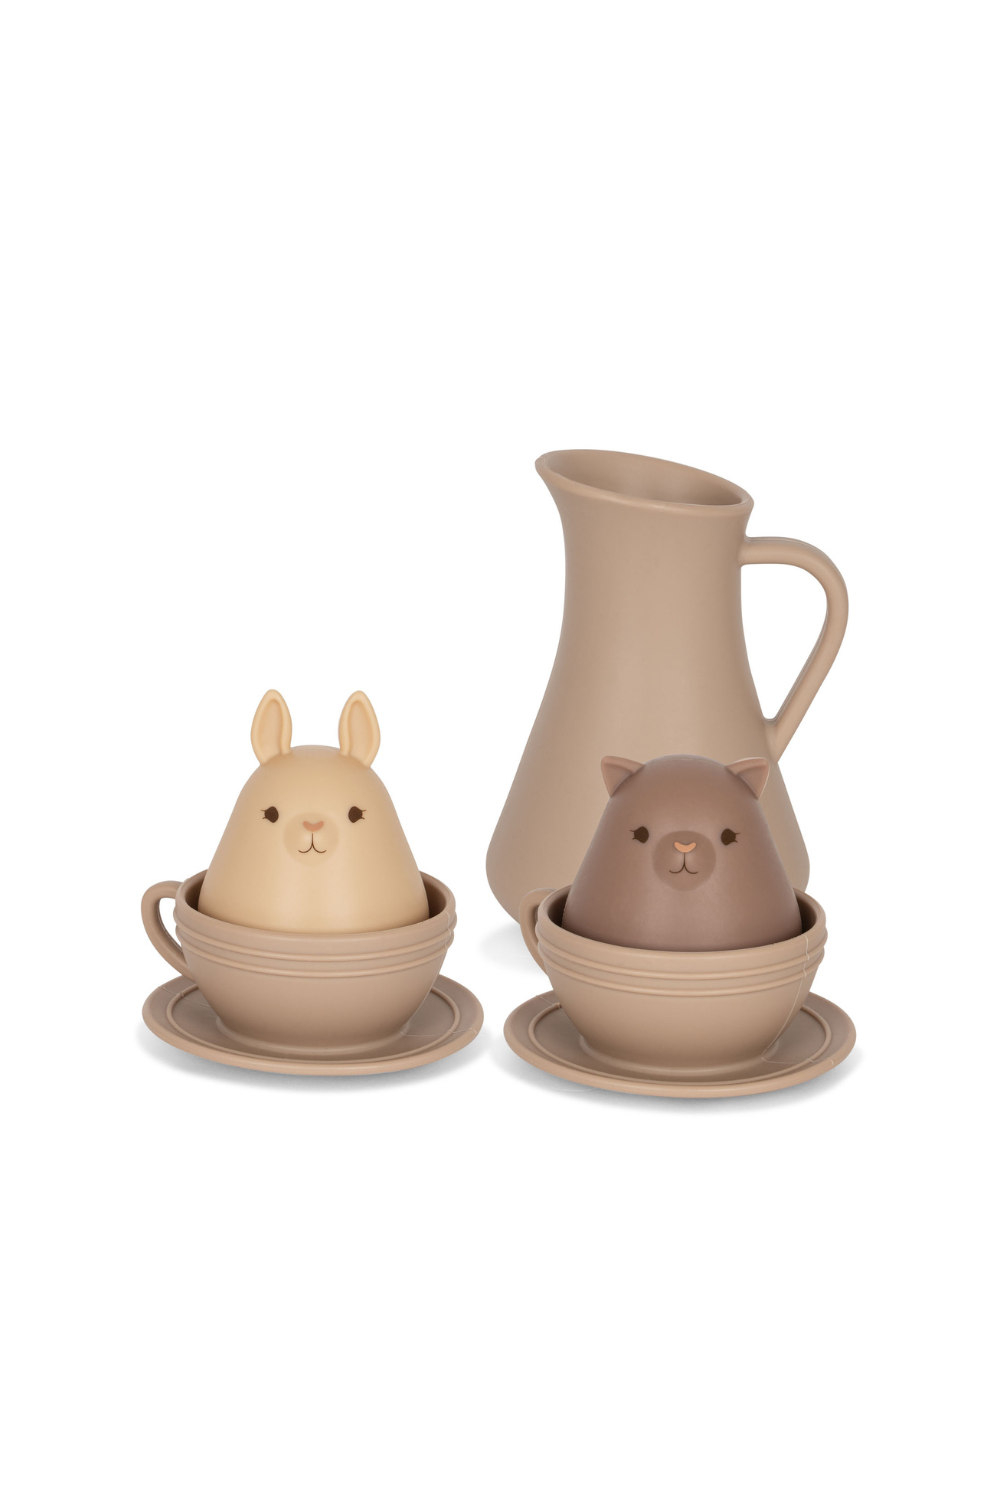 Silicone Bath Toy Set - Teacups